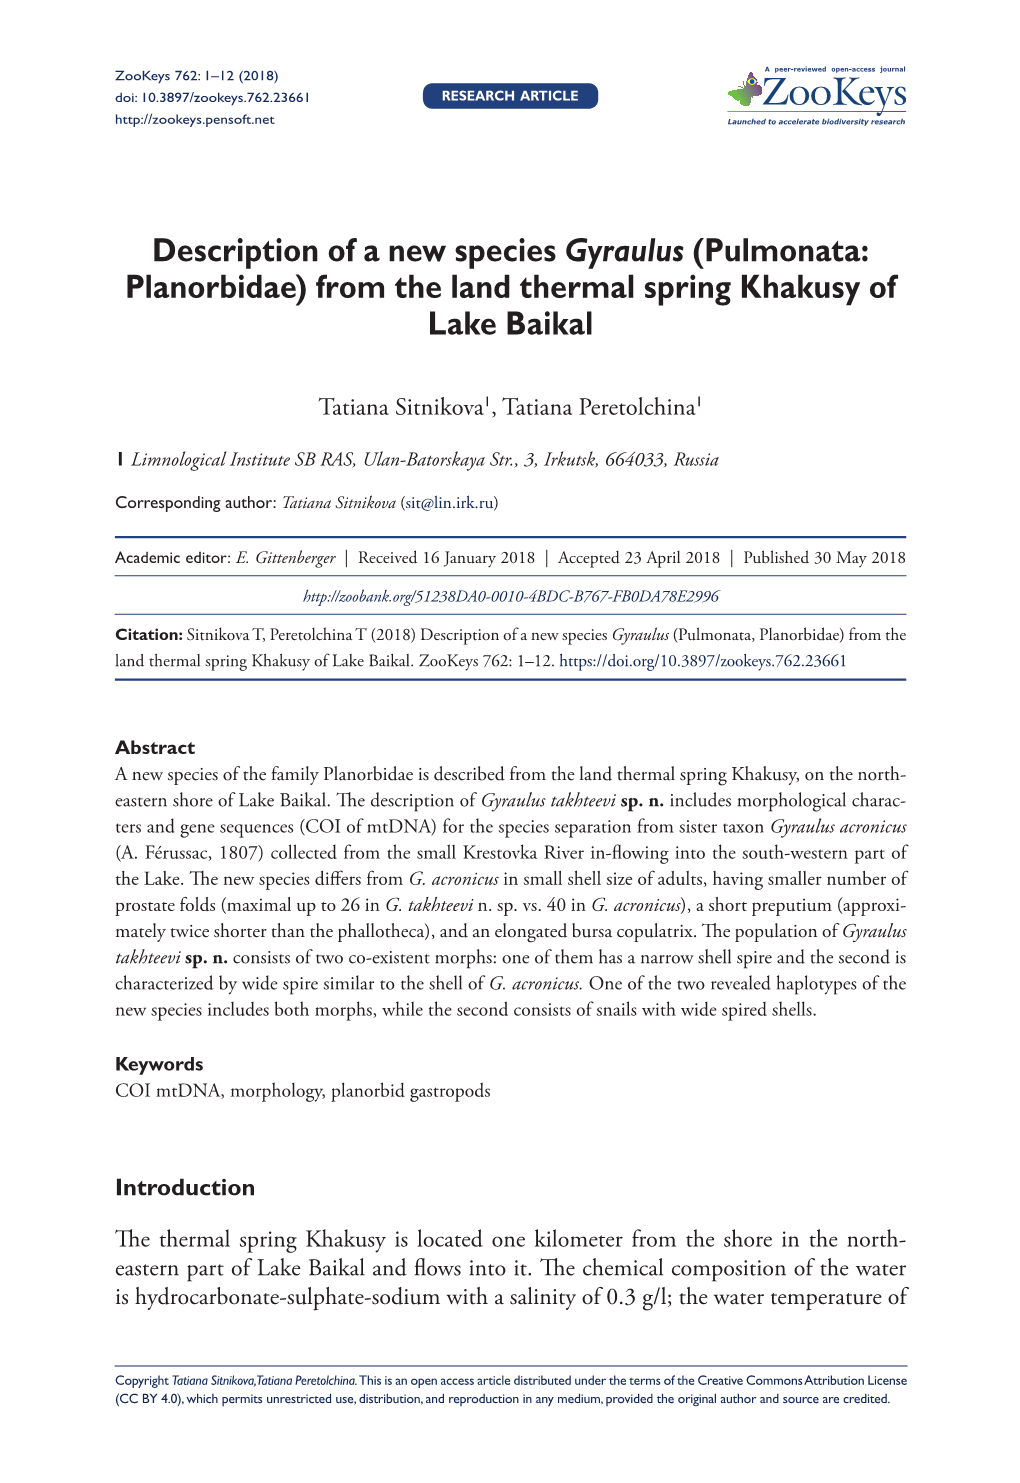 Pulmonata: Planorbidae) from the Land Thermal Spring Khakusy of Lake Baikal